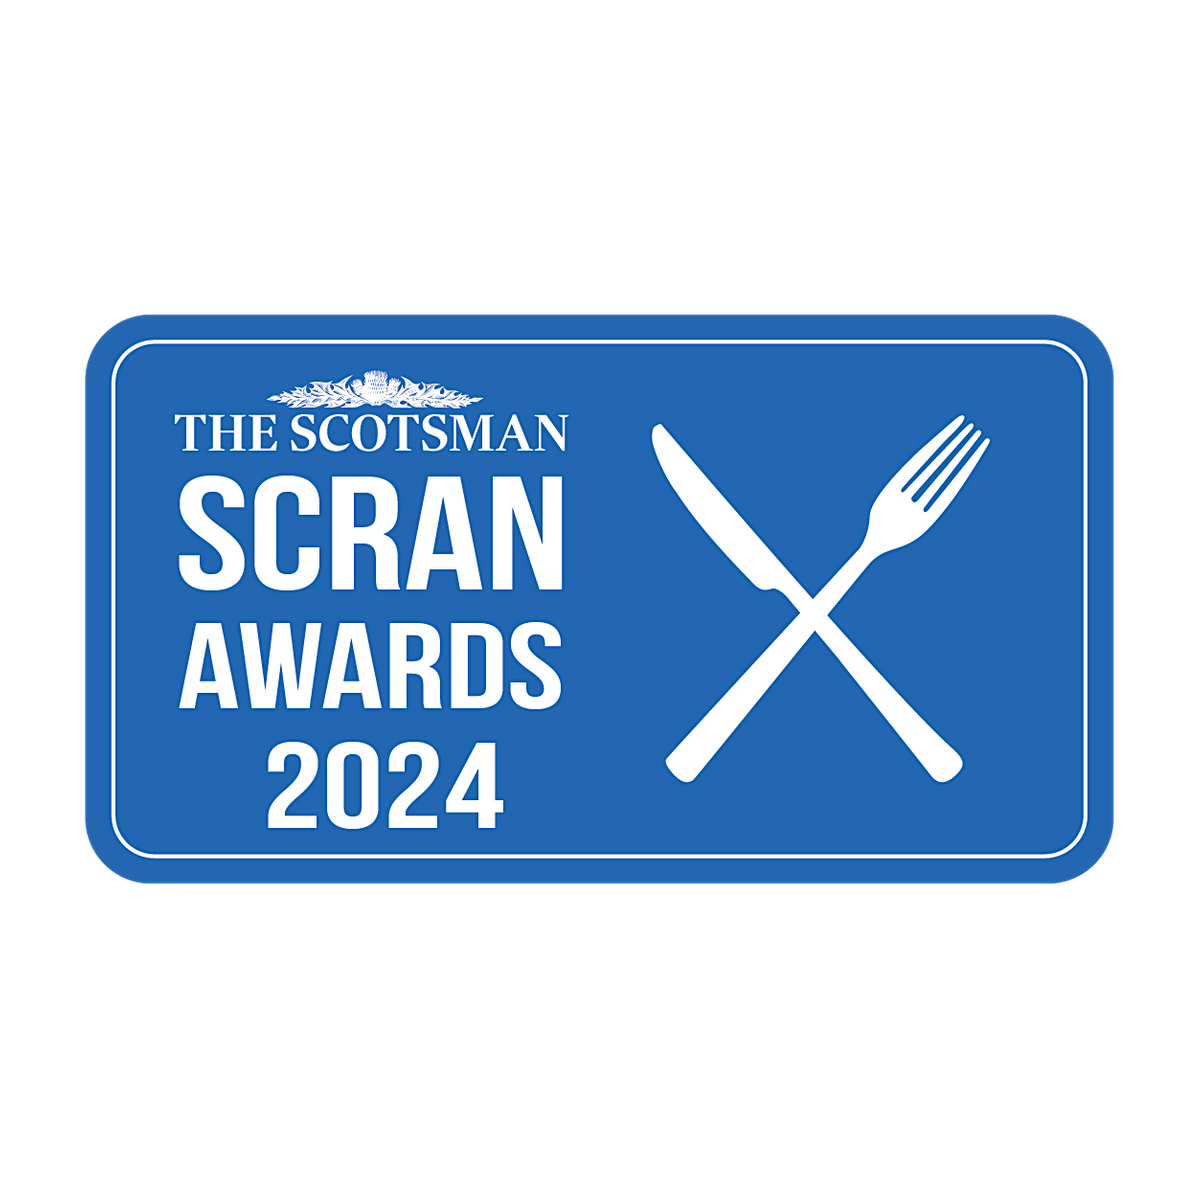 The Scotsman Scran Awards 2024